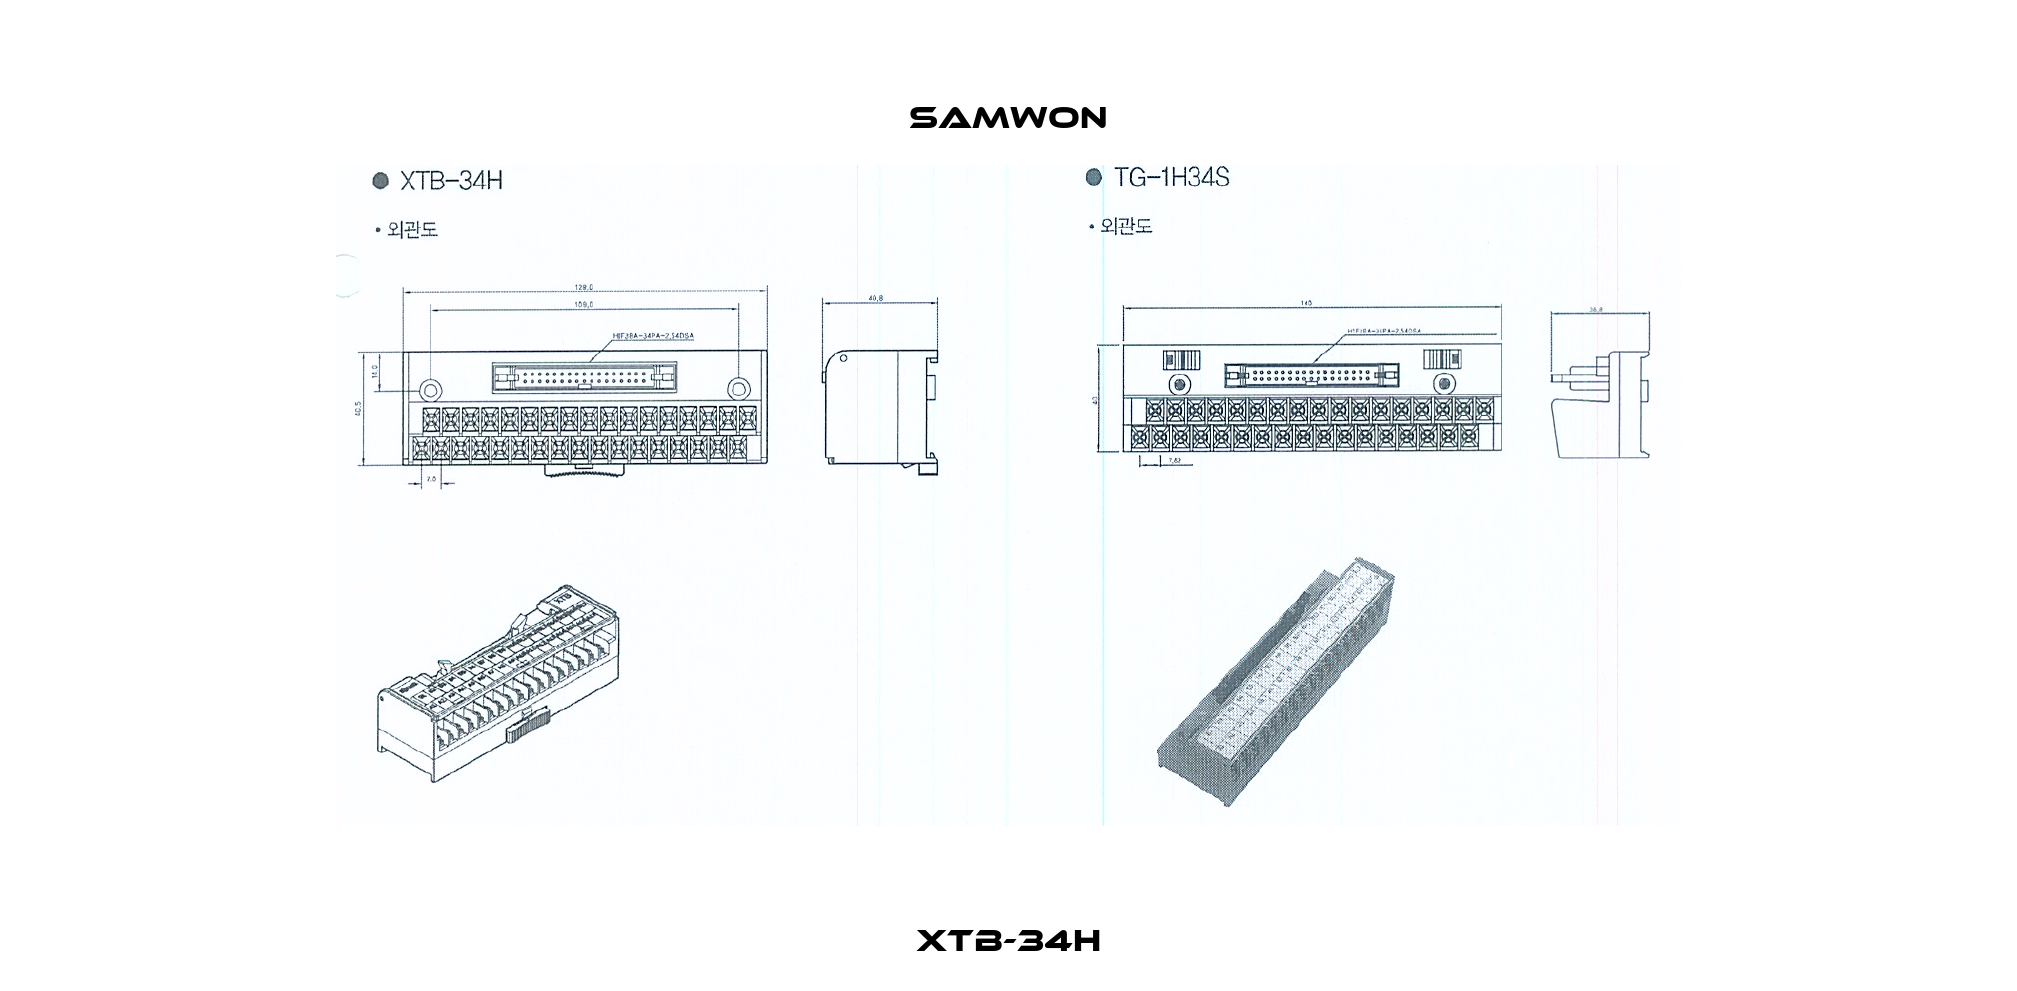 XTB-34H Samwon